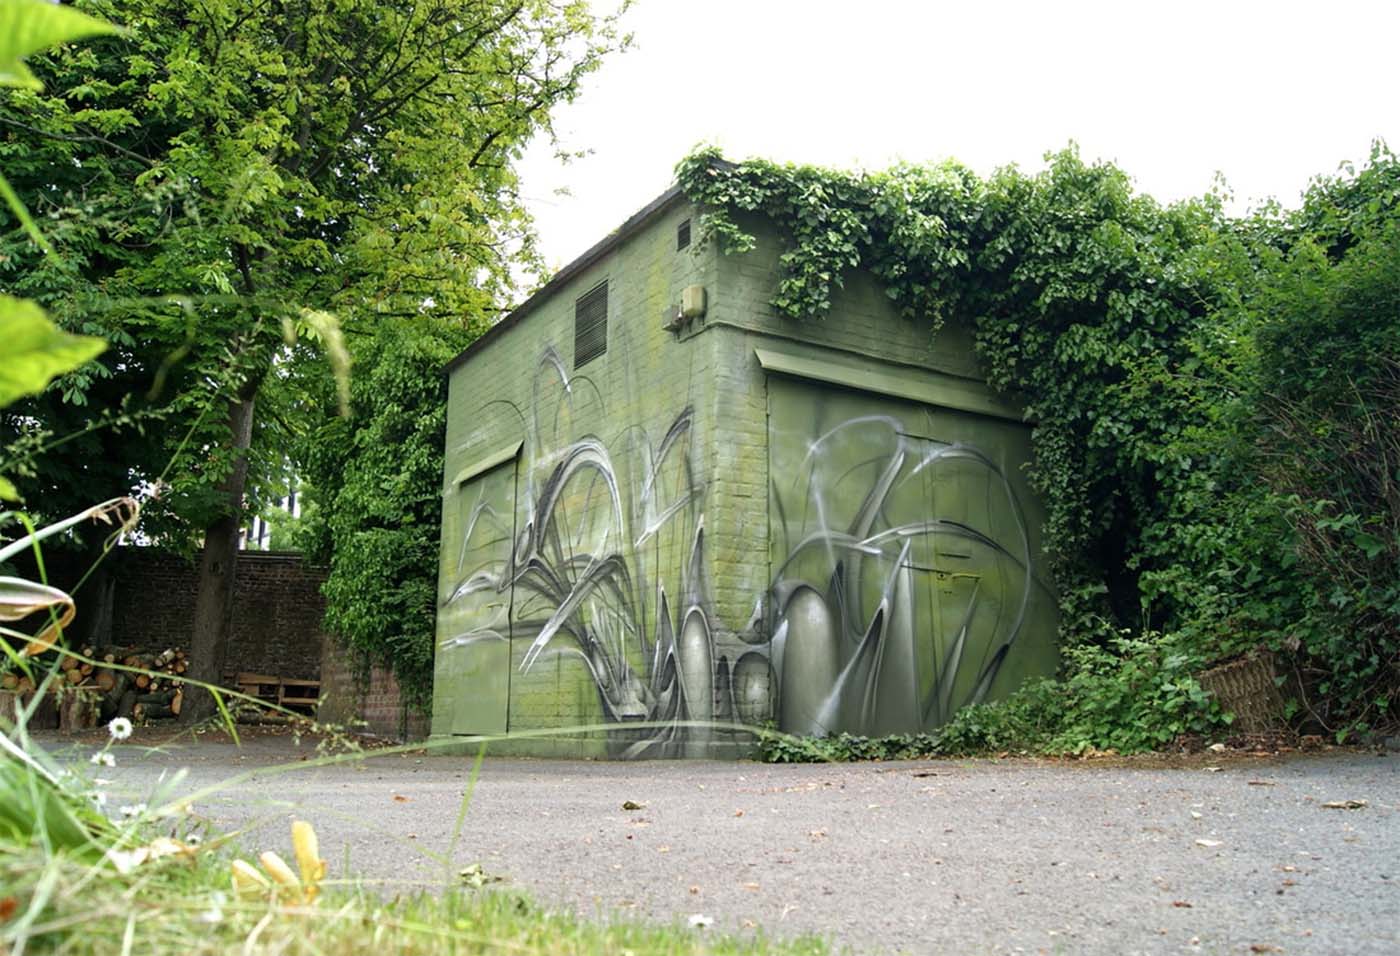 https://propaganza.be/nl/wp-content/uploads/sites/3/2019/04/Amin-abstract-nature-propaganza-urban-artist-graffiti-graff-street-art-spray-painting-belgique-4.jpg